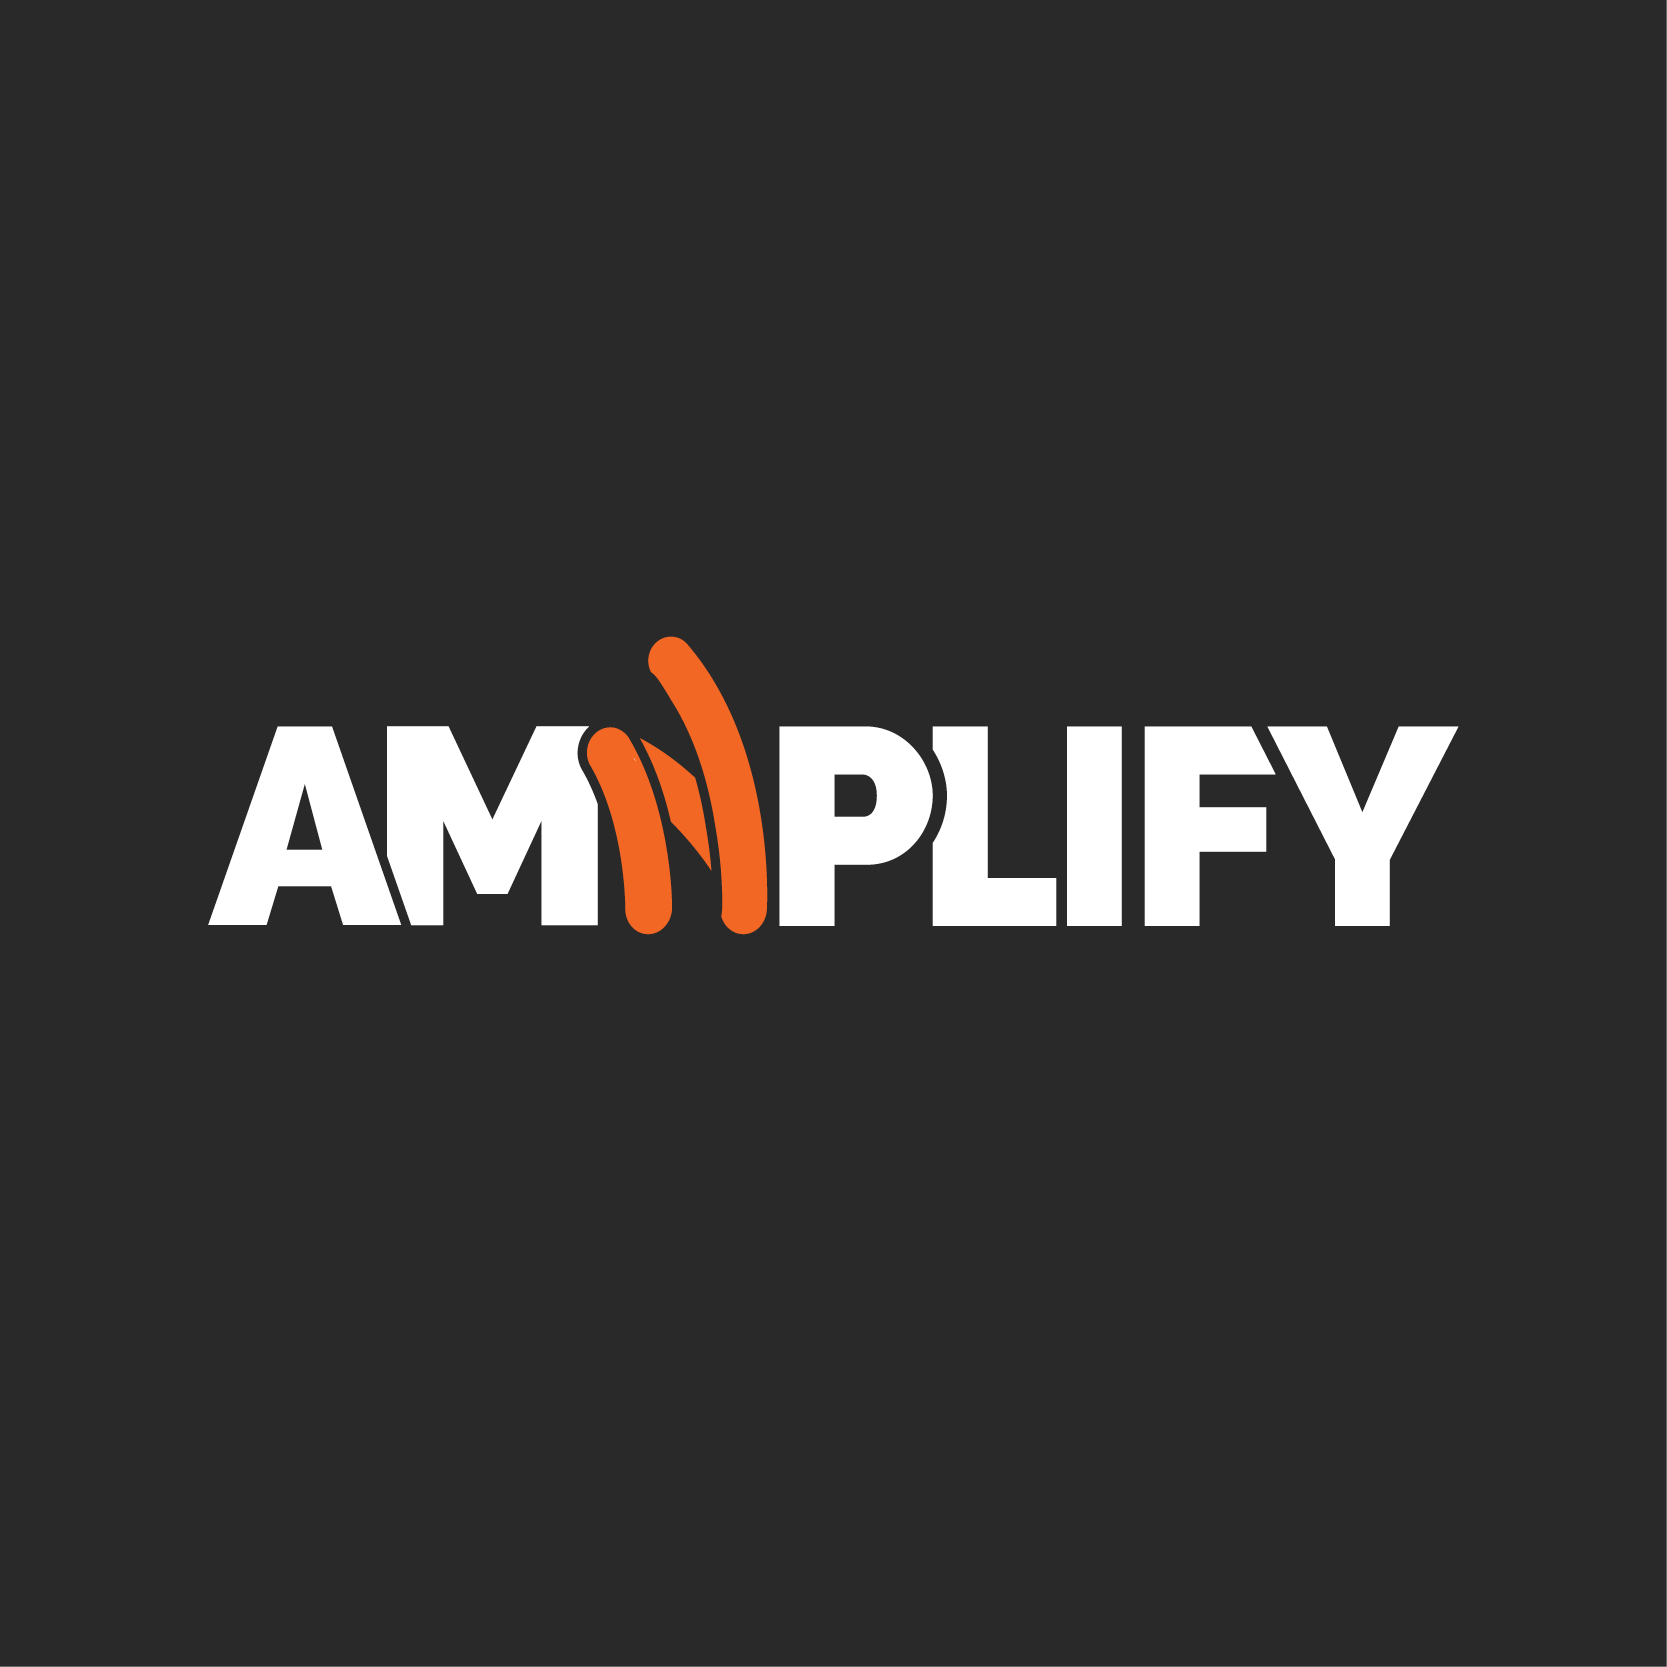 Amnplify Logo